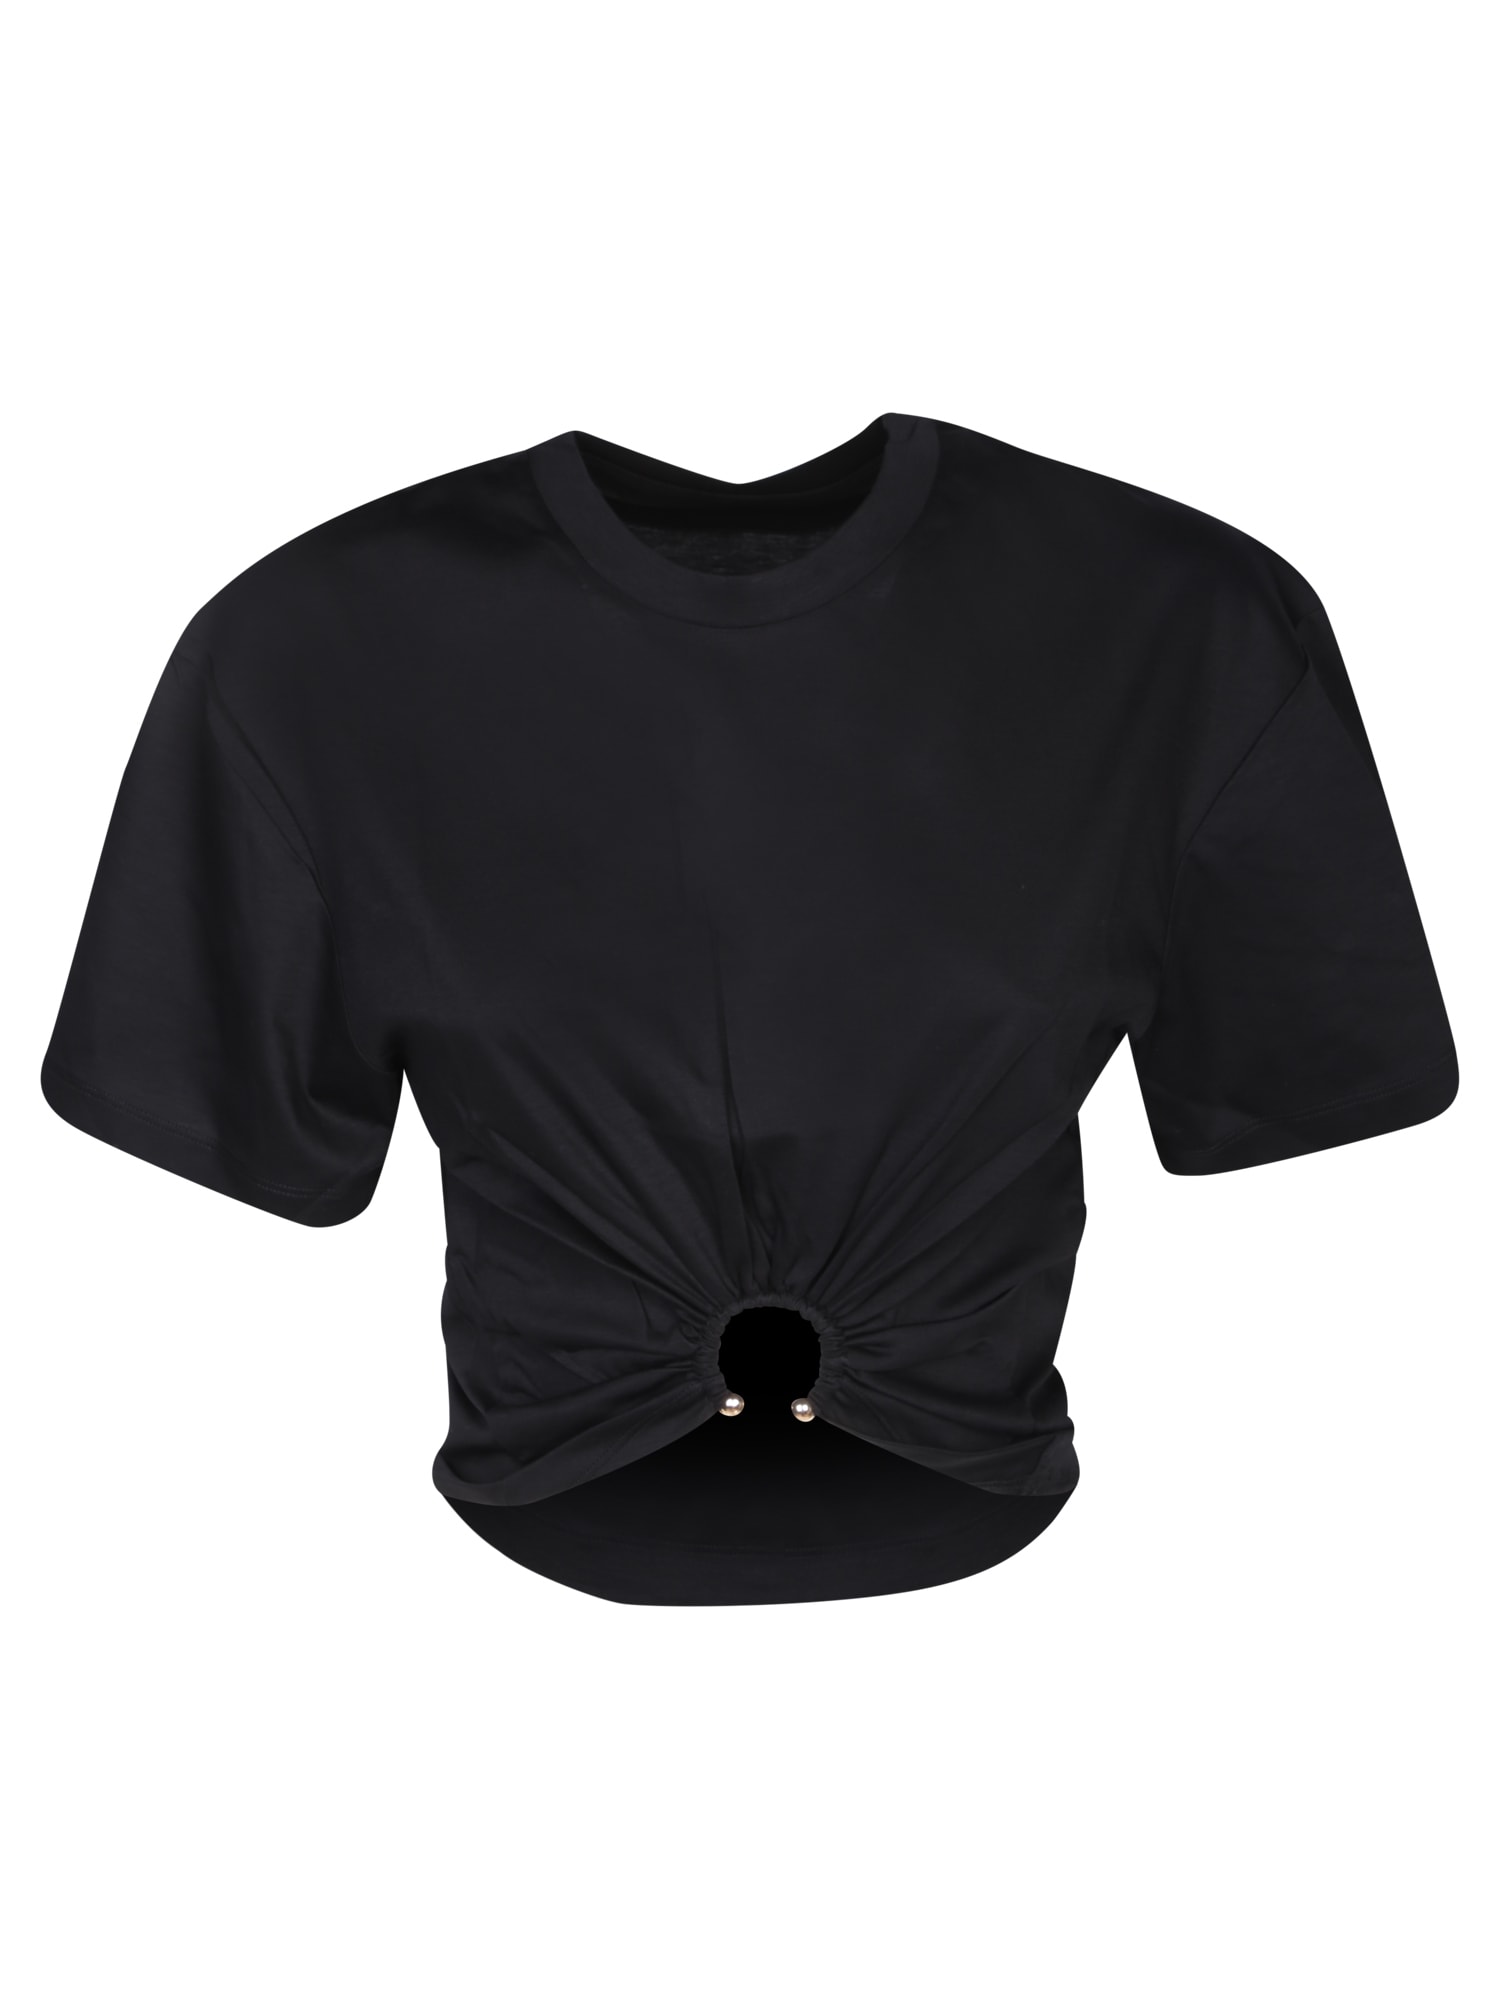 Paco Rabanne Black Ring Crop T-shirt